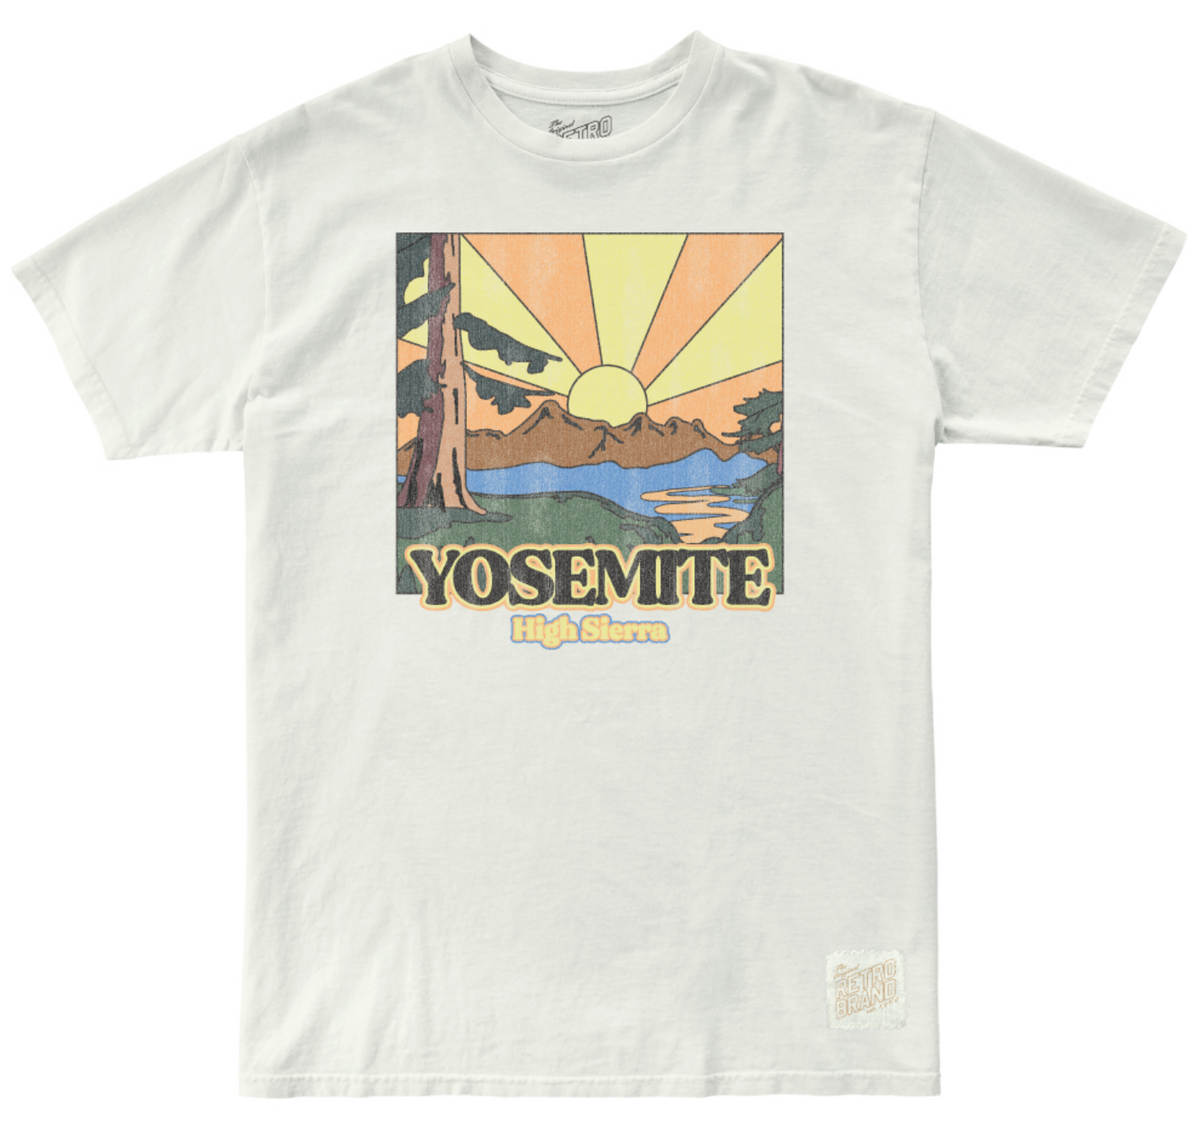 Yosemite High Sierra 100% Cotton Tee